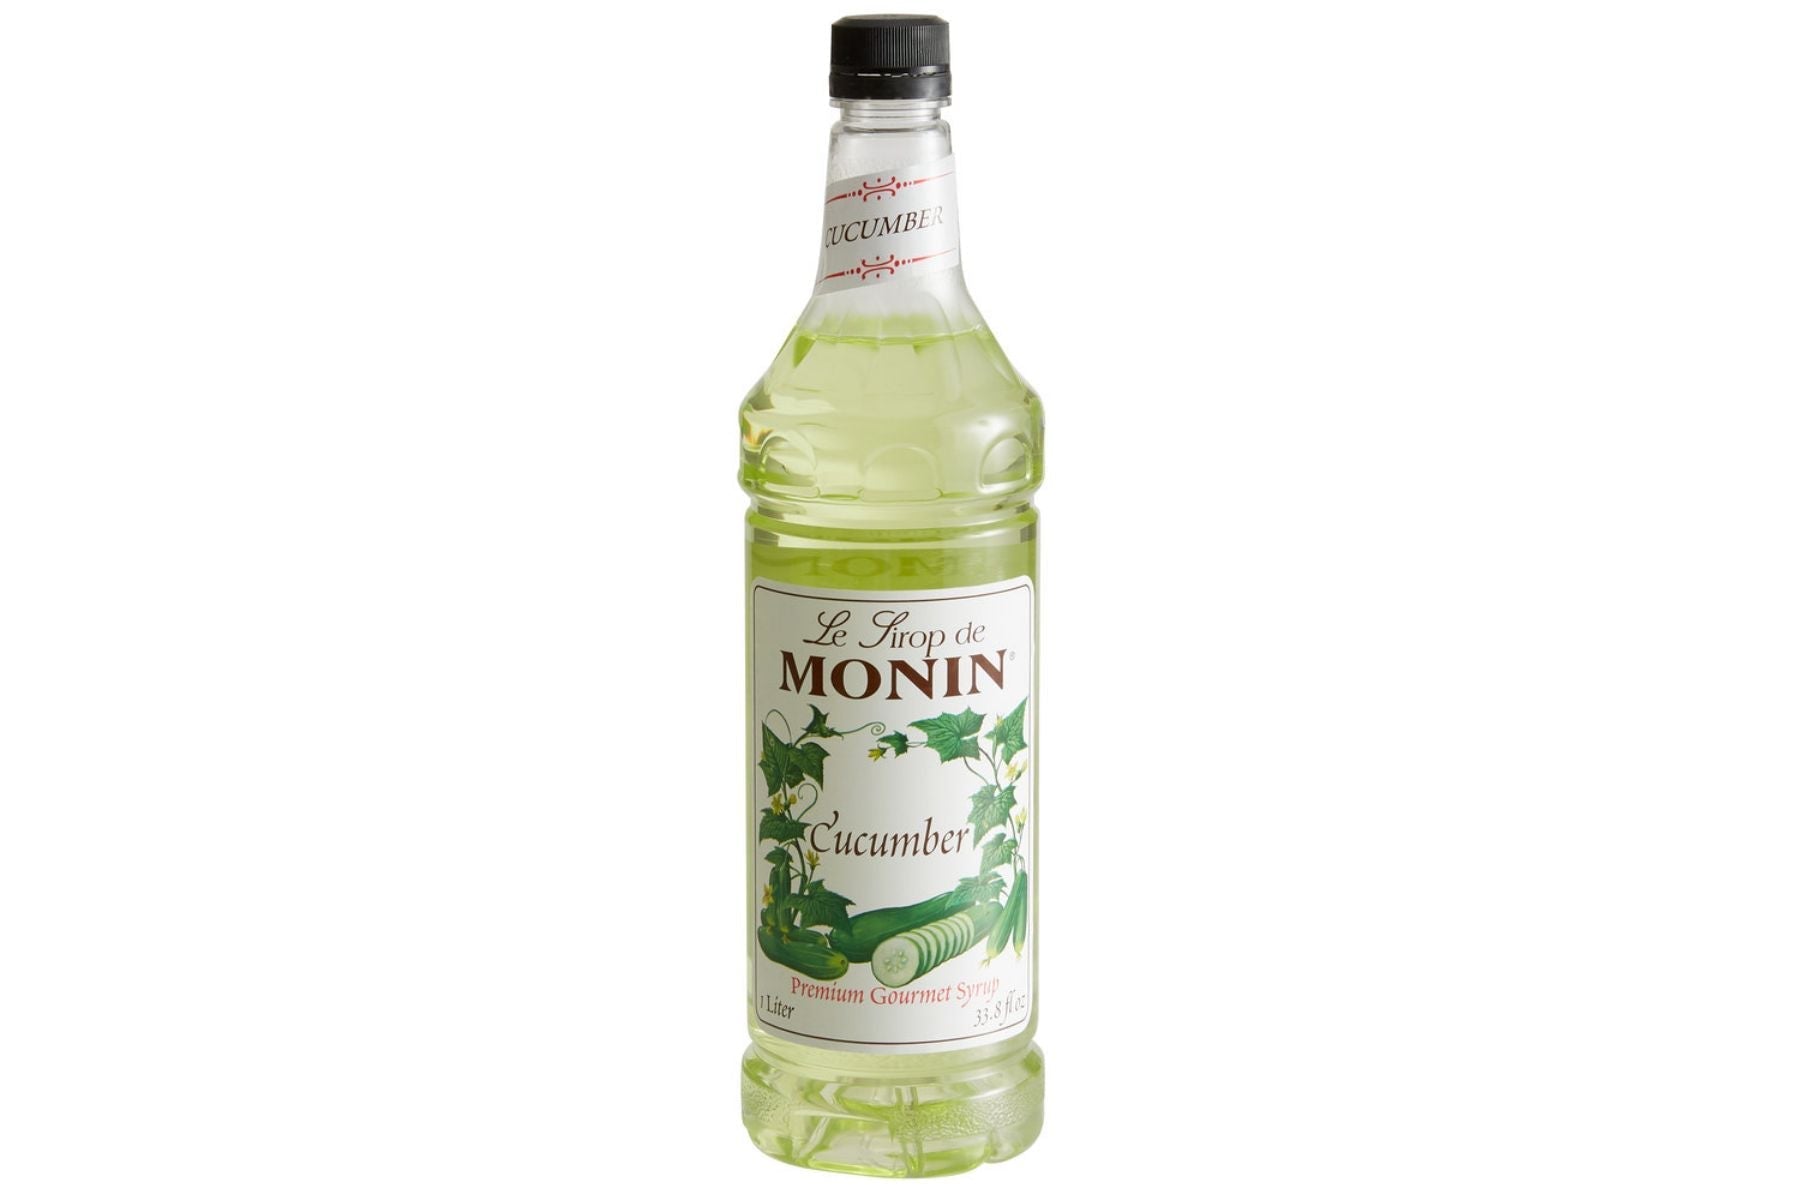 Monin Classic Syrup - 1L Plastic Bottle: Cucumber